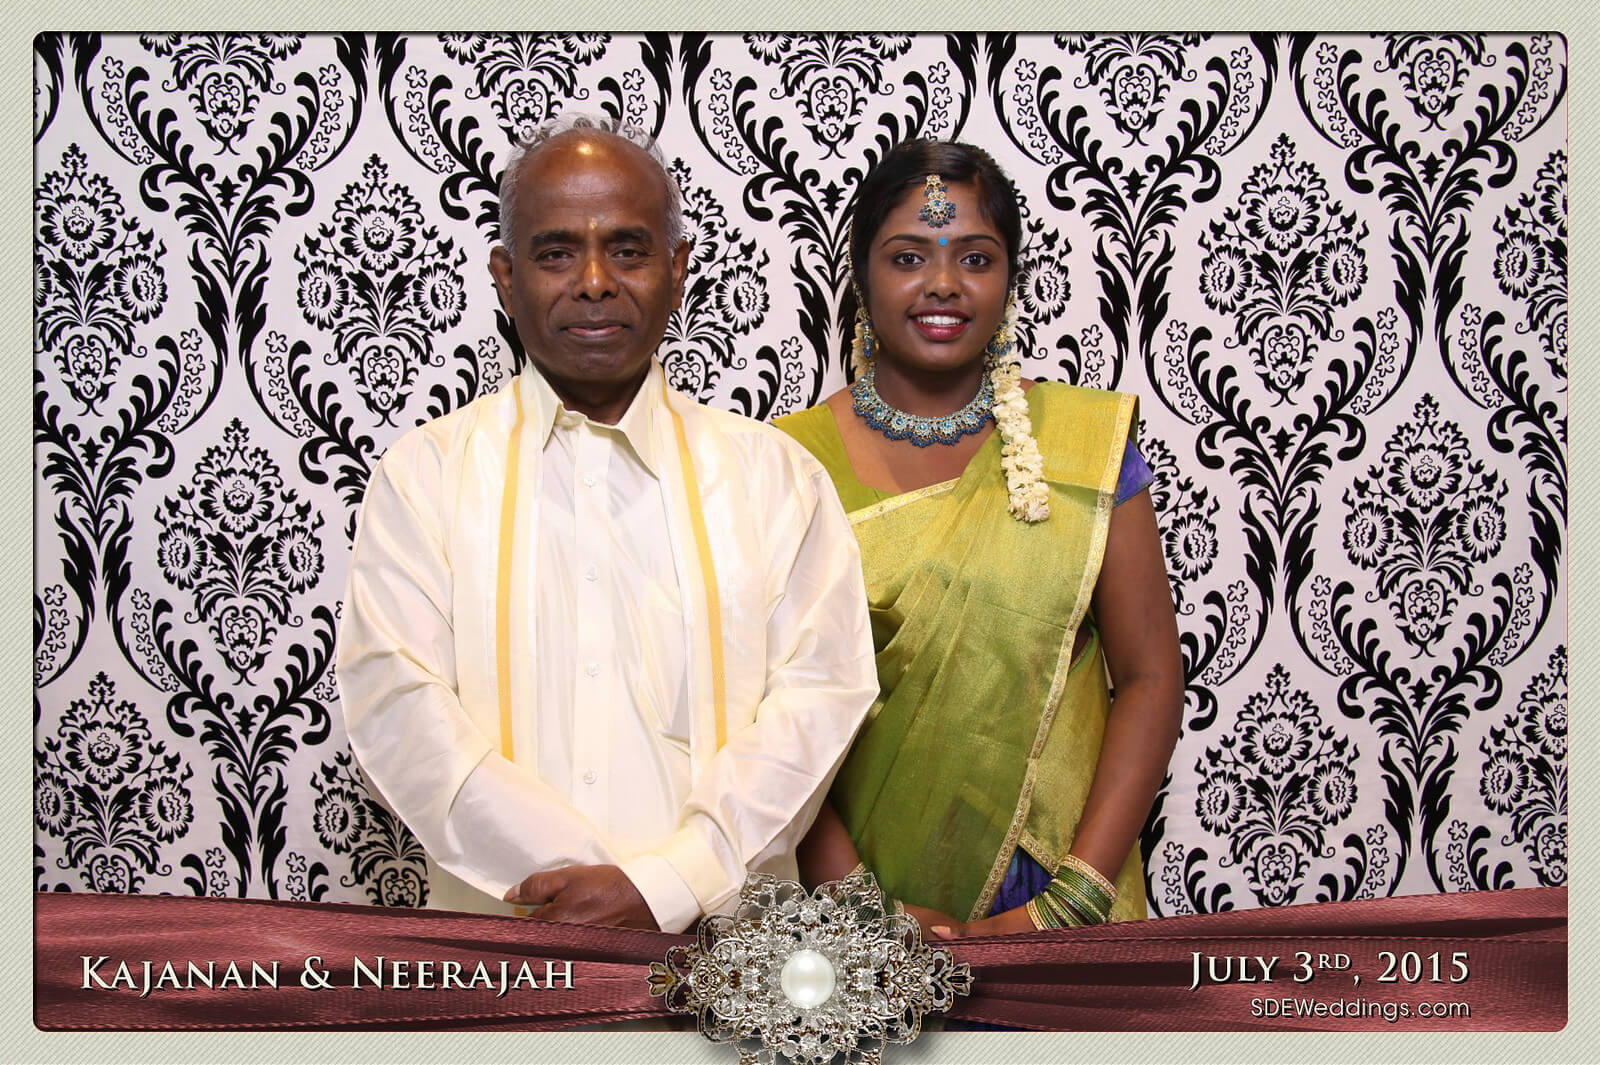 Toronto Scarborough Convention Centre Hindu Wedding Photo Booth Rental 4